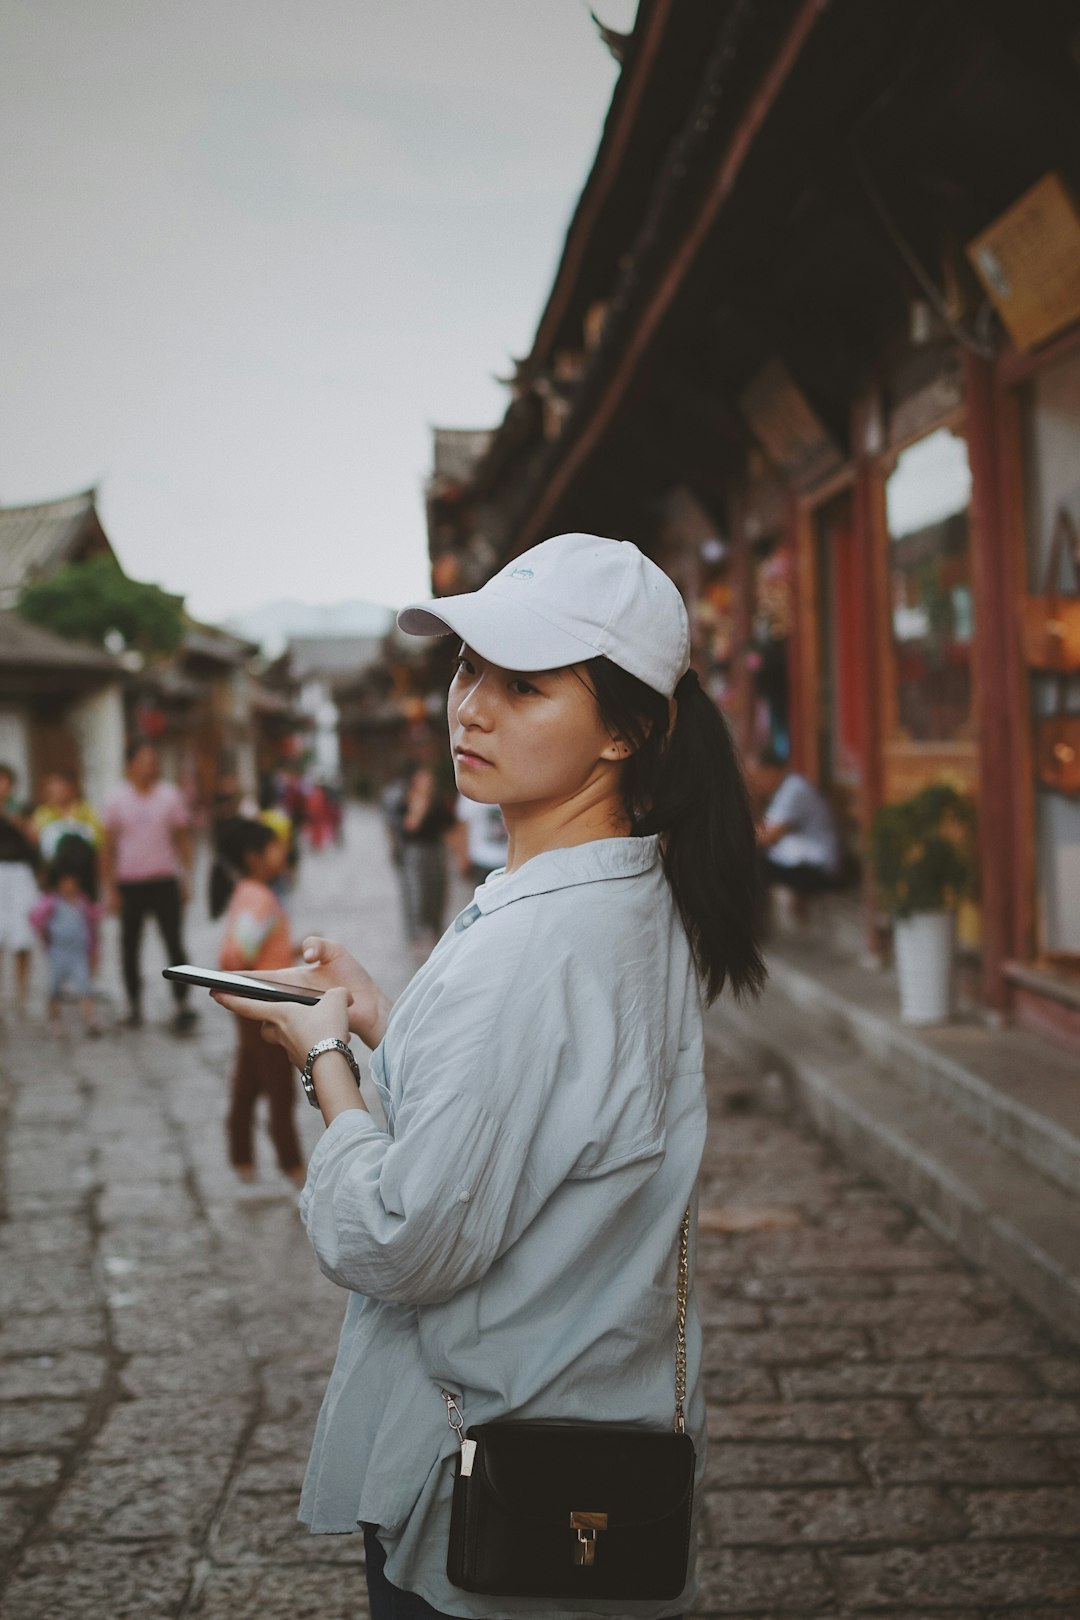 woman holding smartphone